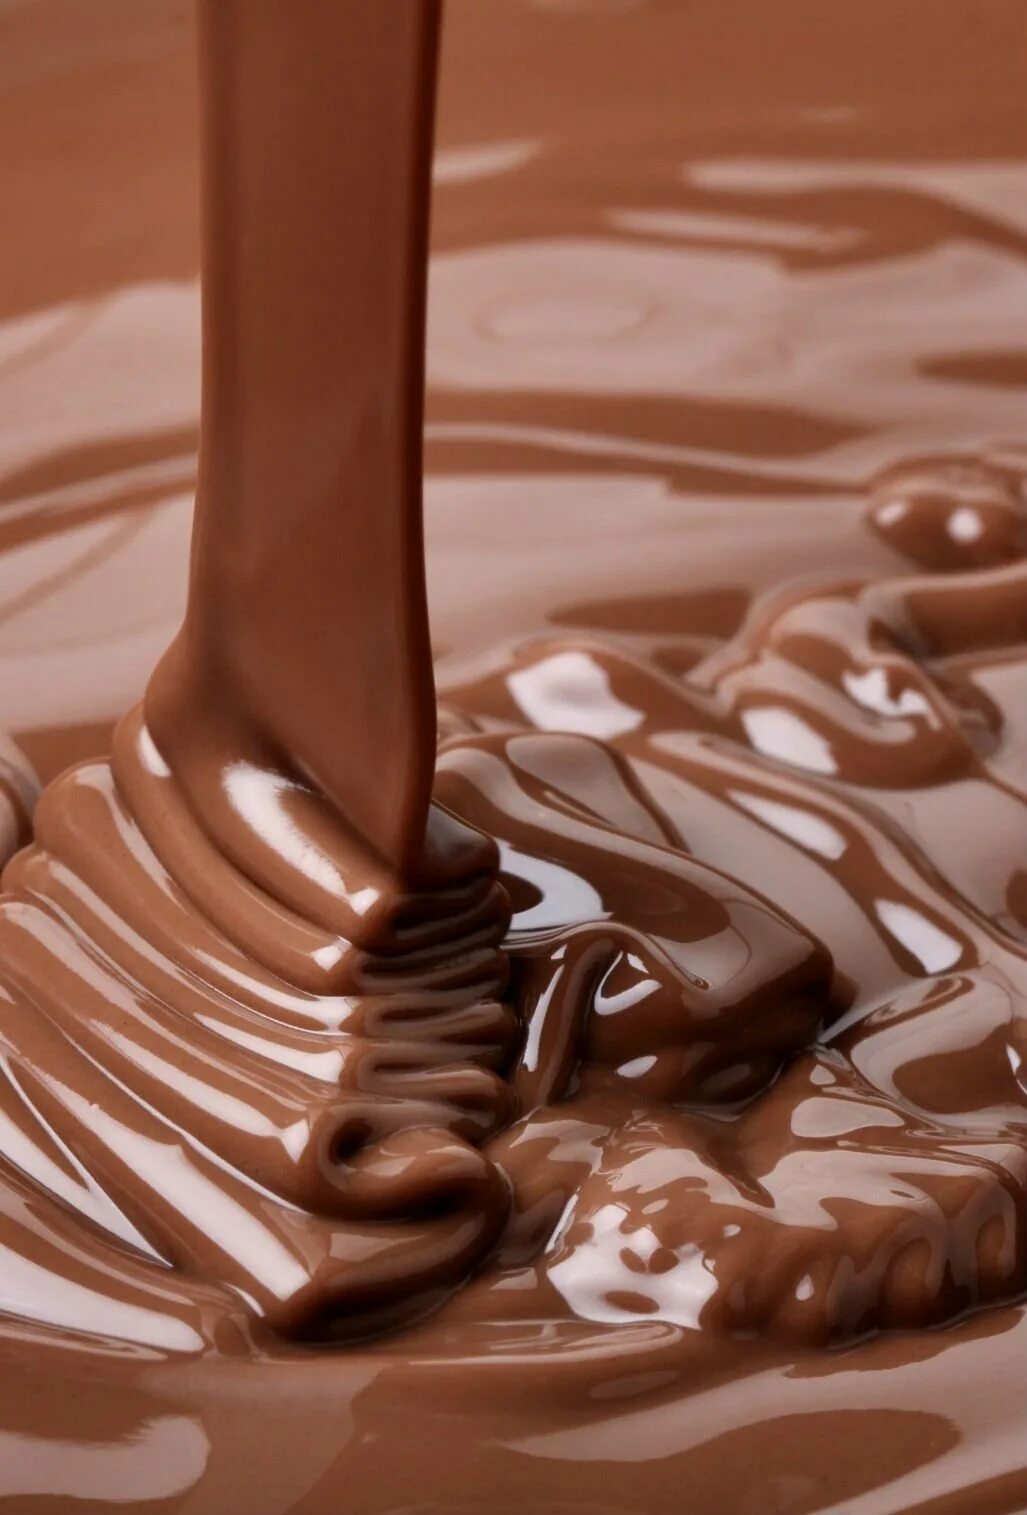 Растаявший шоколад. Растопленный шоколад. Жидкий шоколад. Расплавленный шоколад.